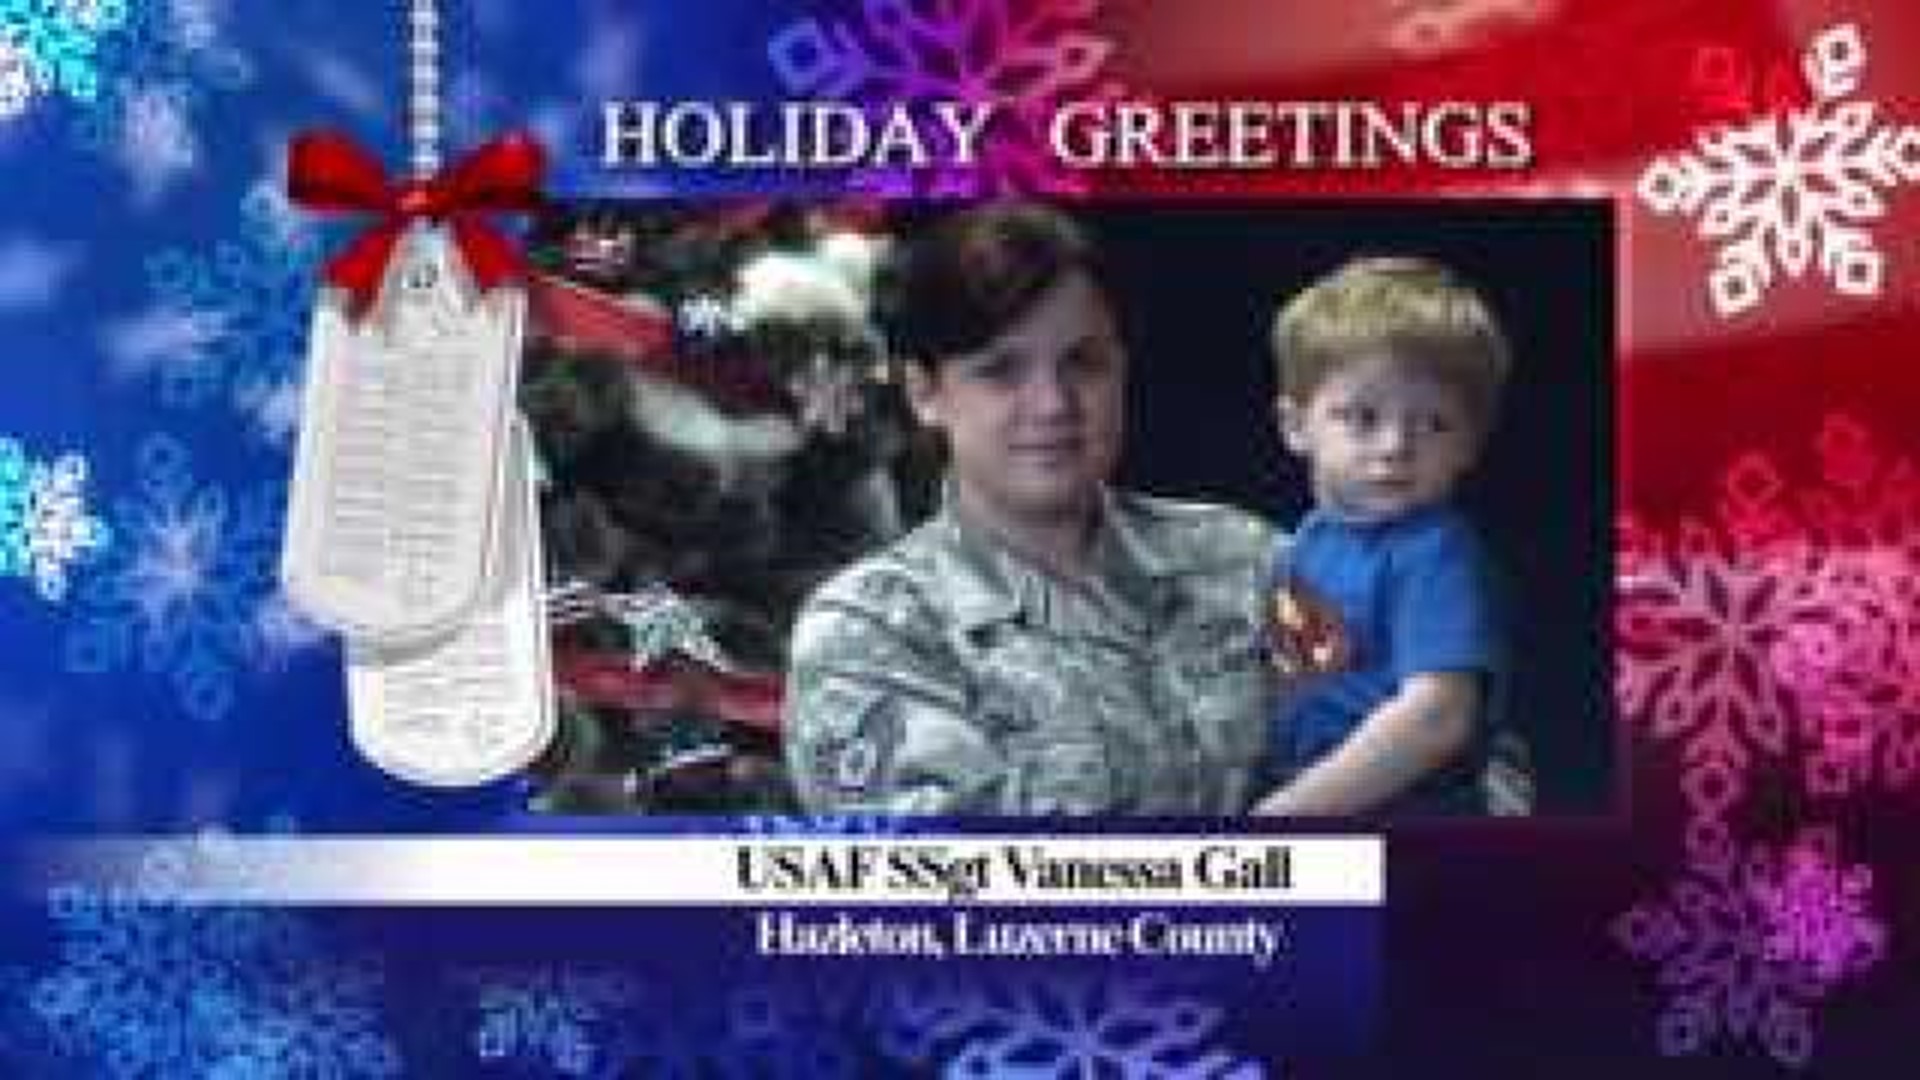 Military Greeting: SSgt Vanessa Gall